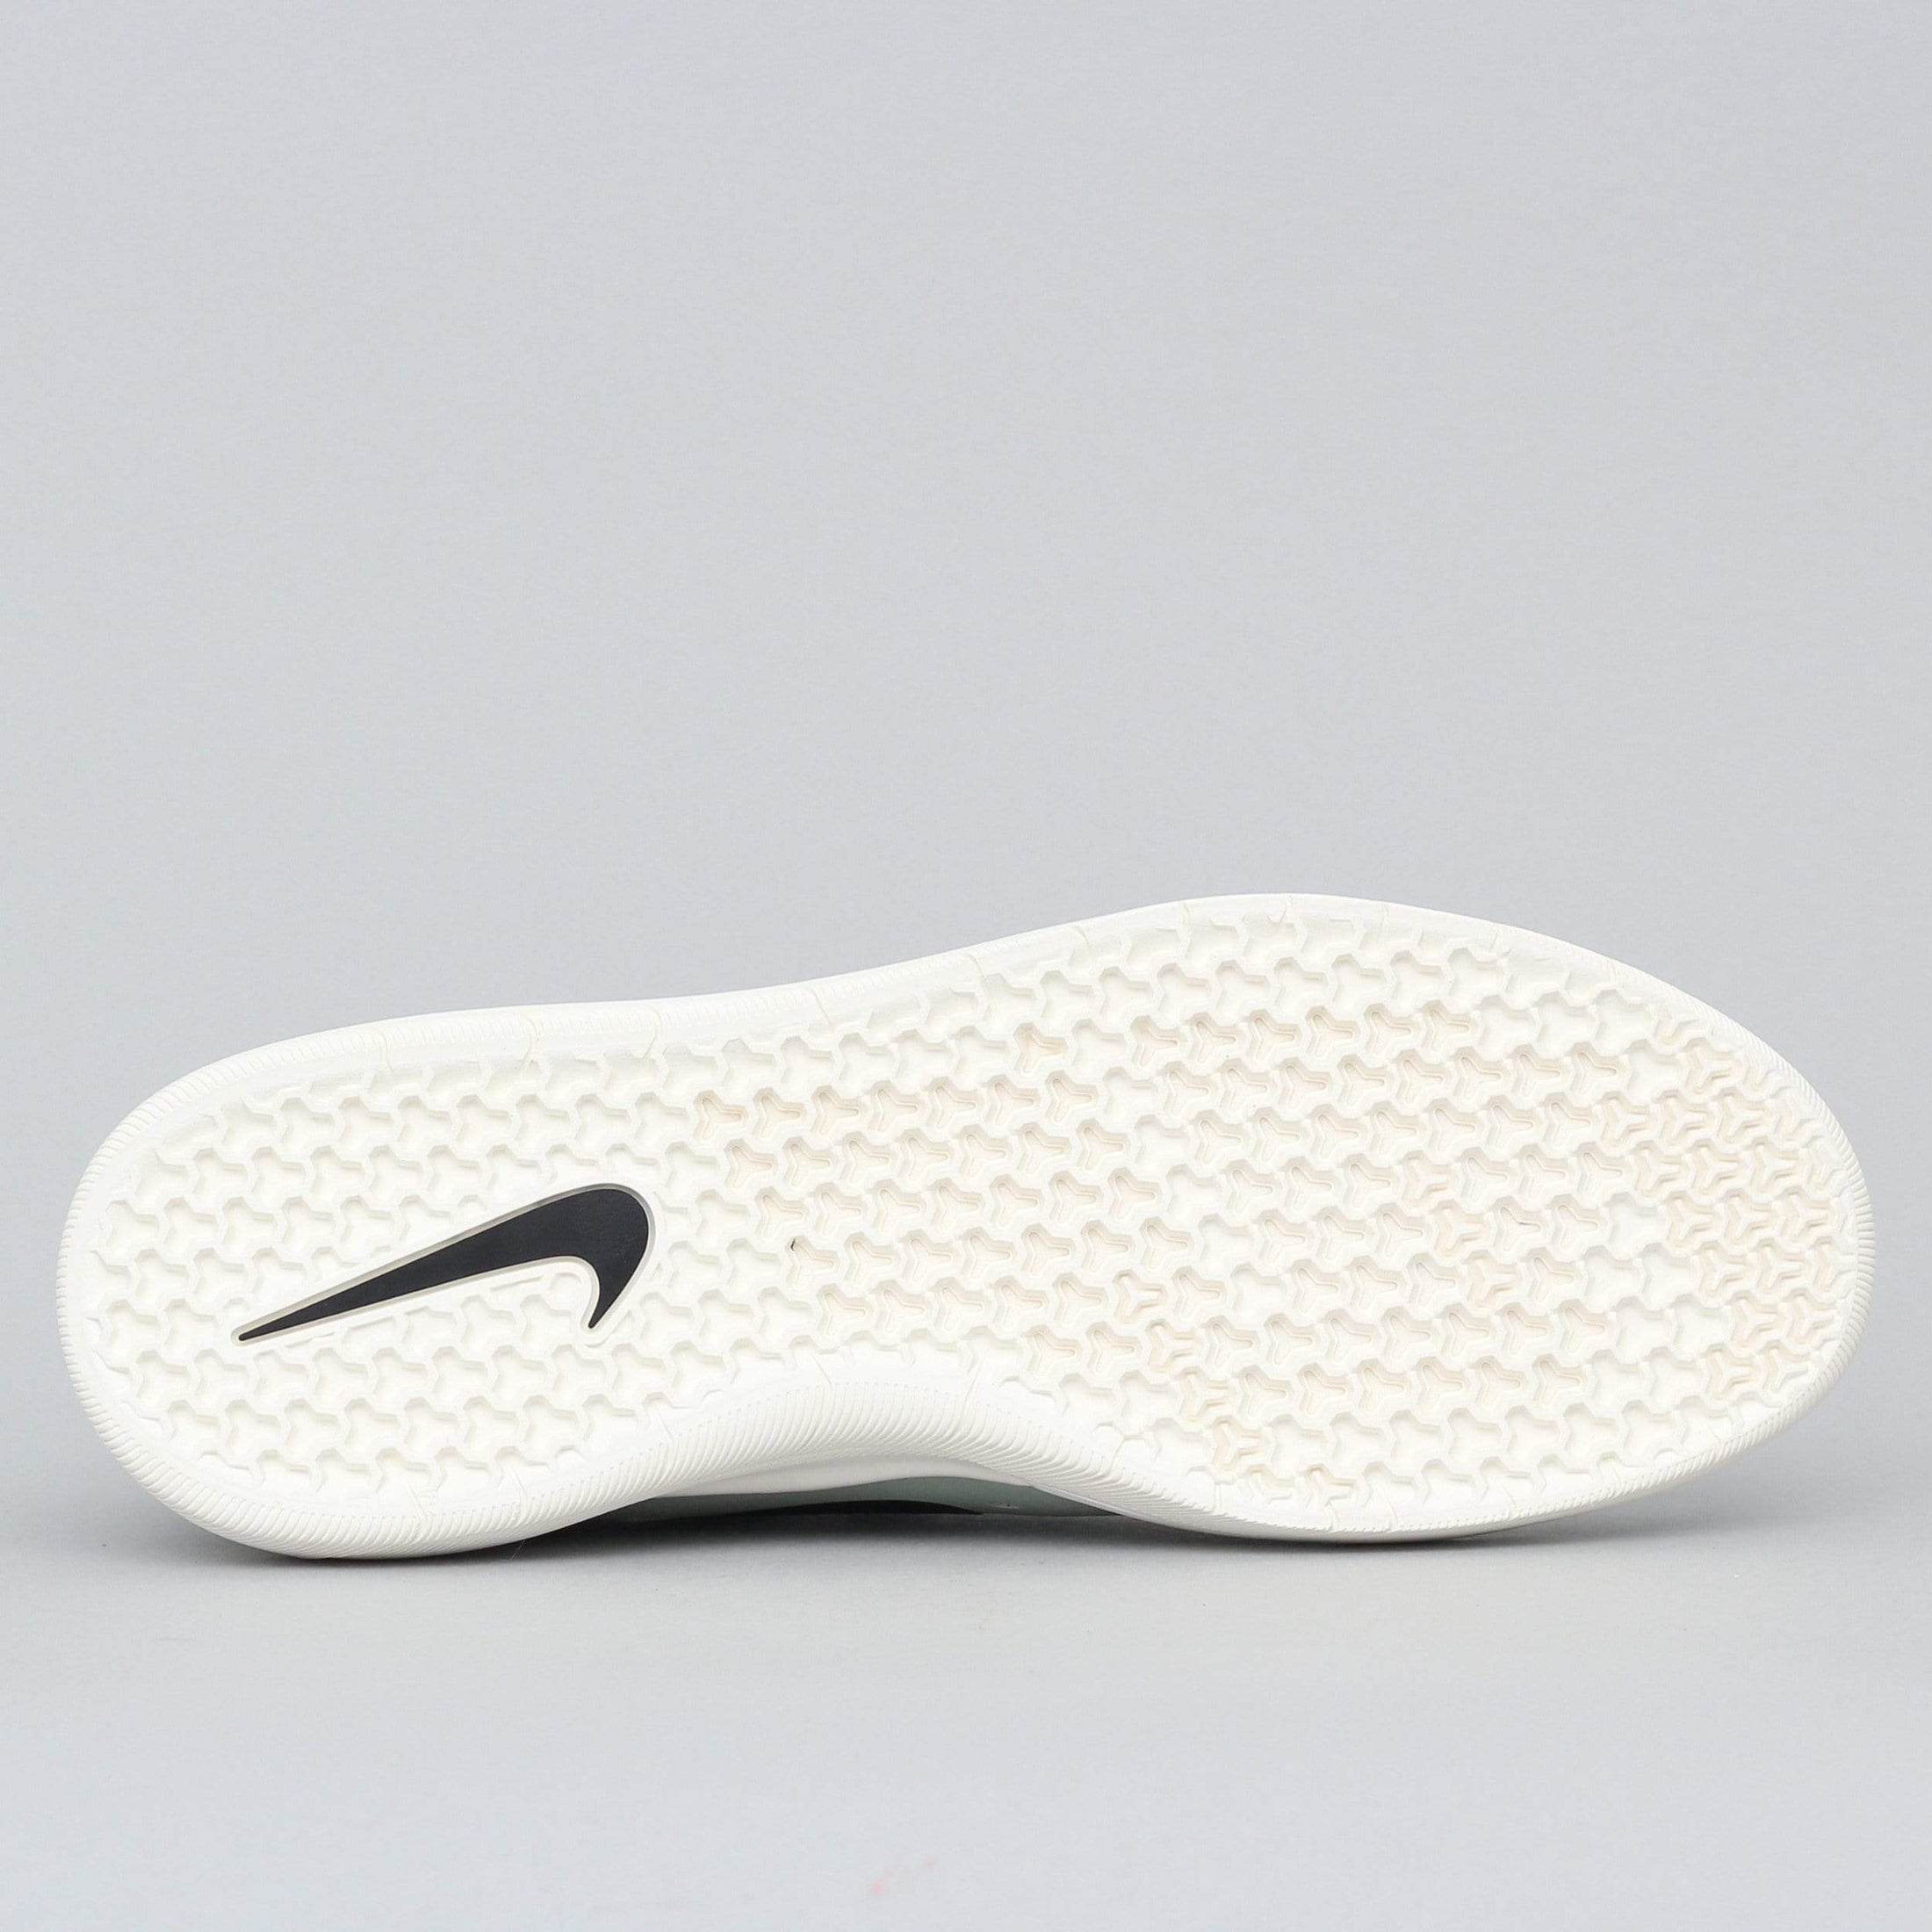 Nike SB Nyjah Free Shoes Jade Horizon / Black - Jade Horizon